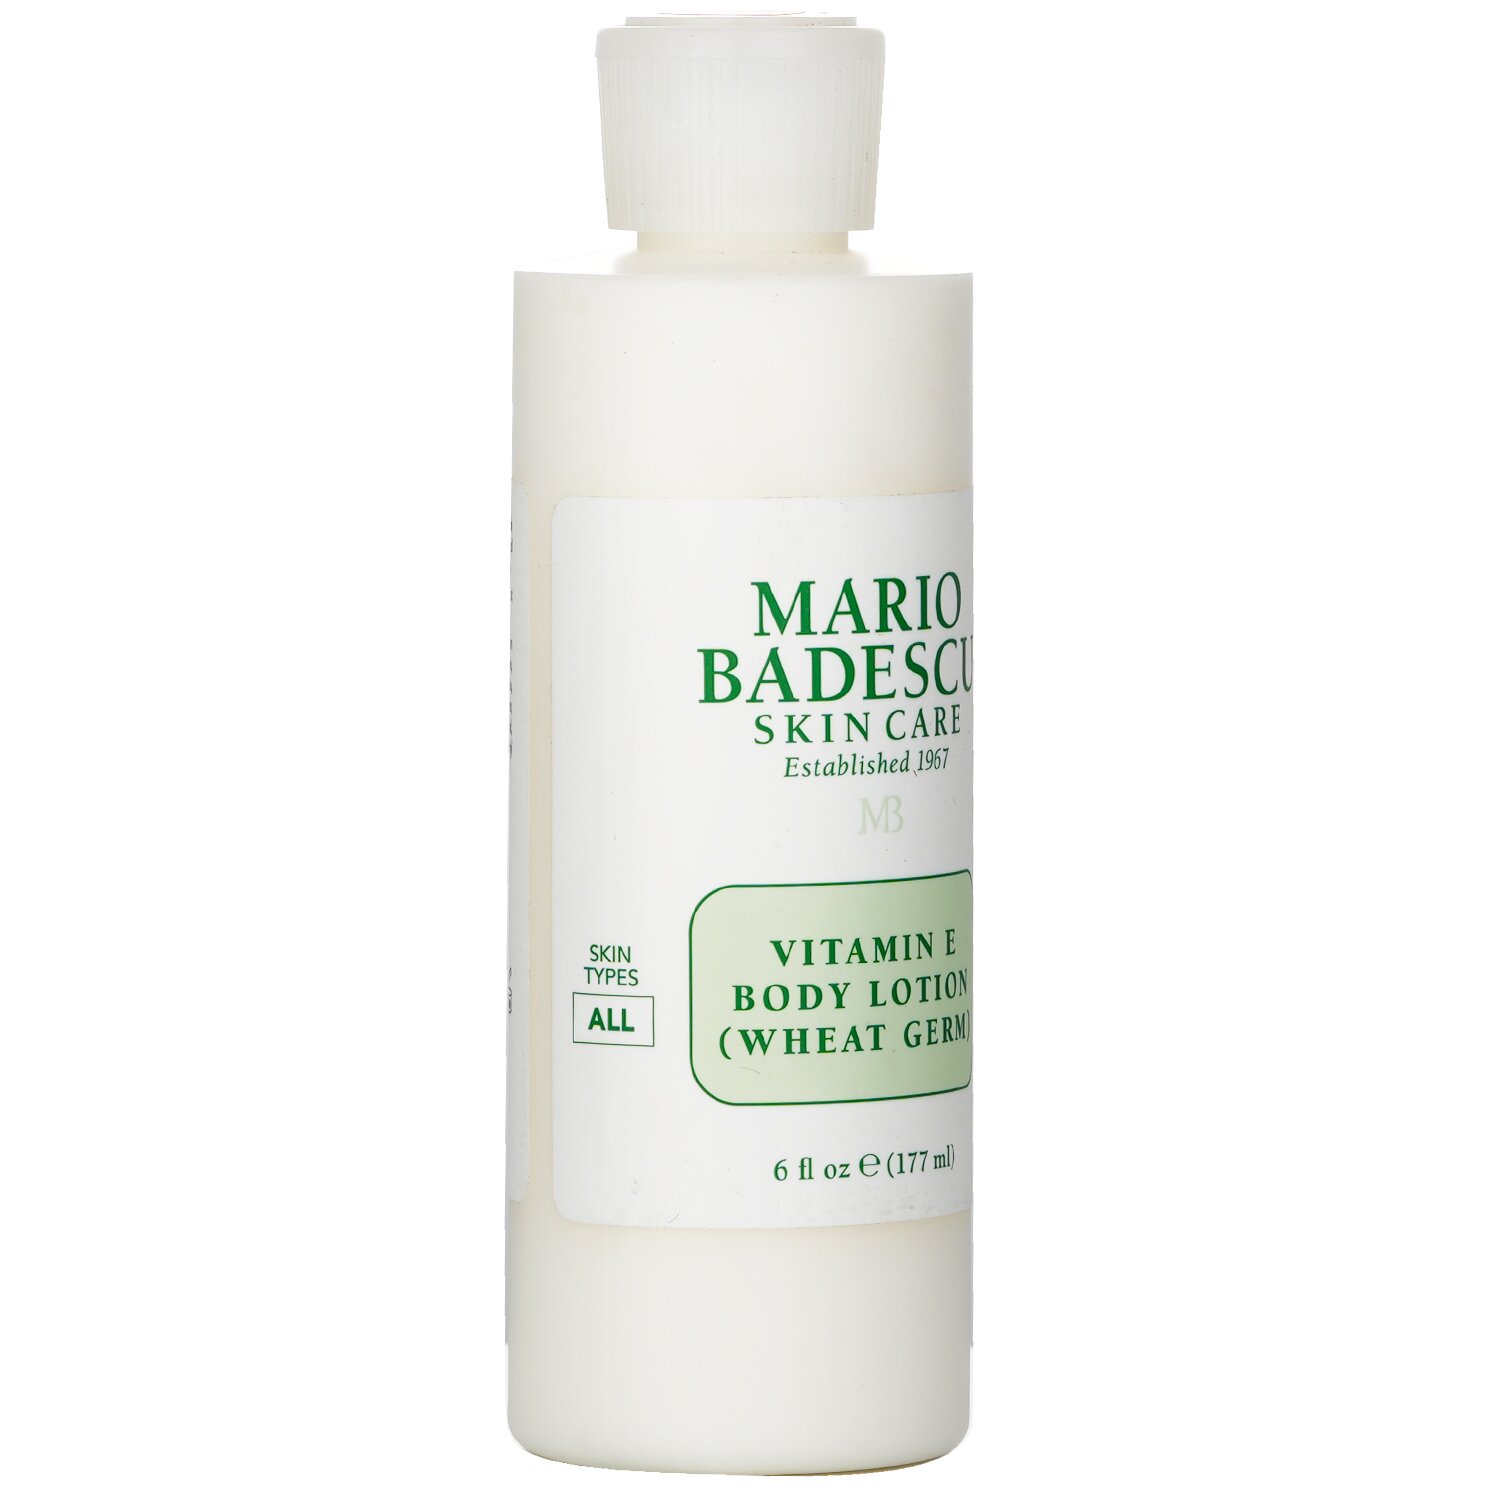 Mario Badescu Vitamin E Body Lotion (Wheat Germ) - For All Skin Types 177ml/6oz